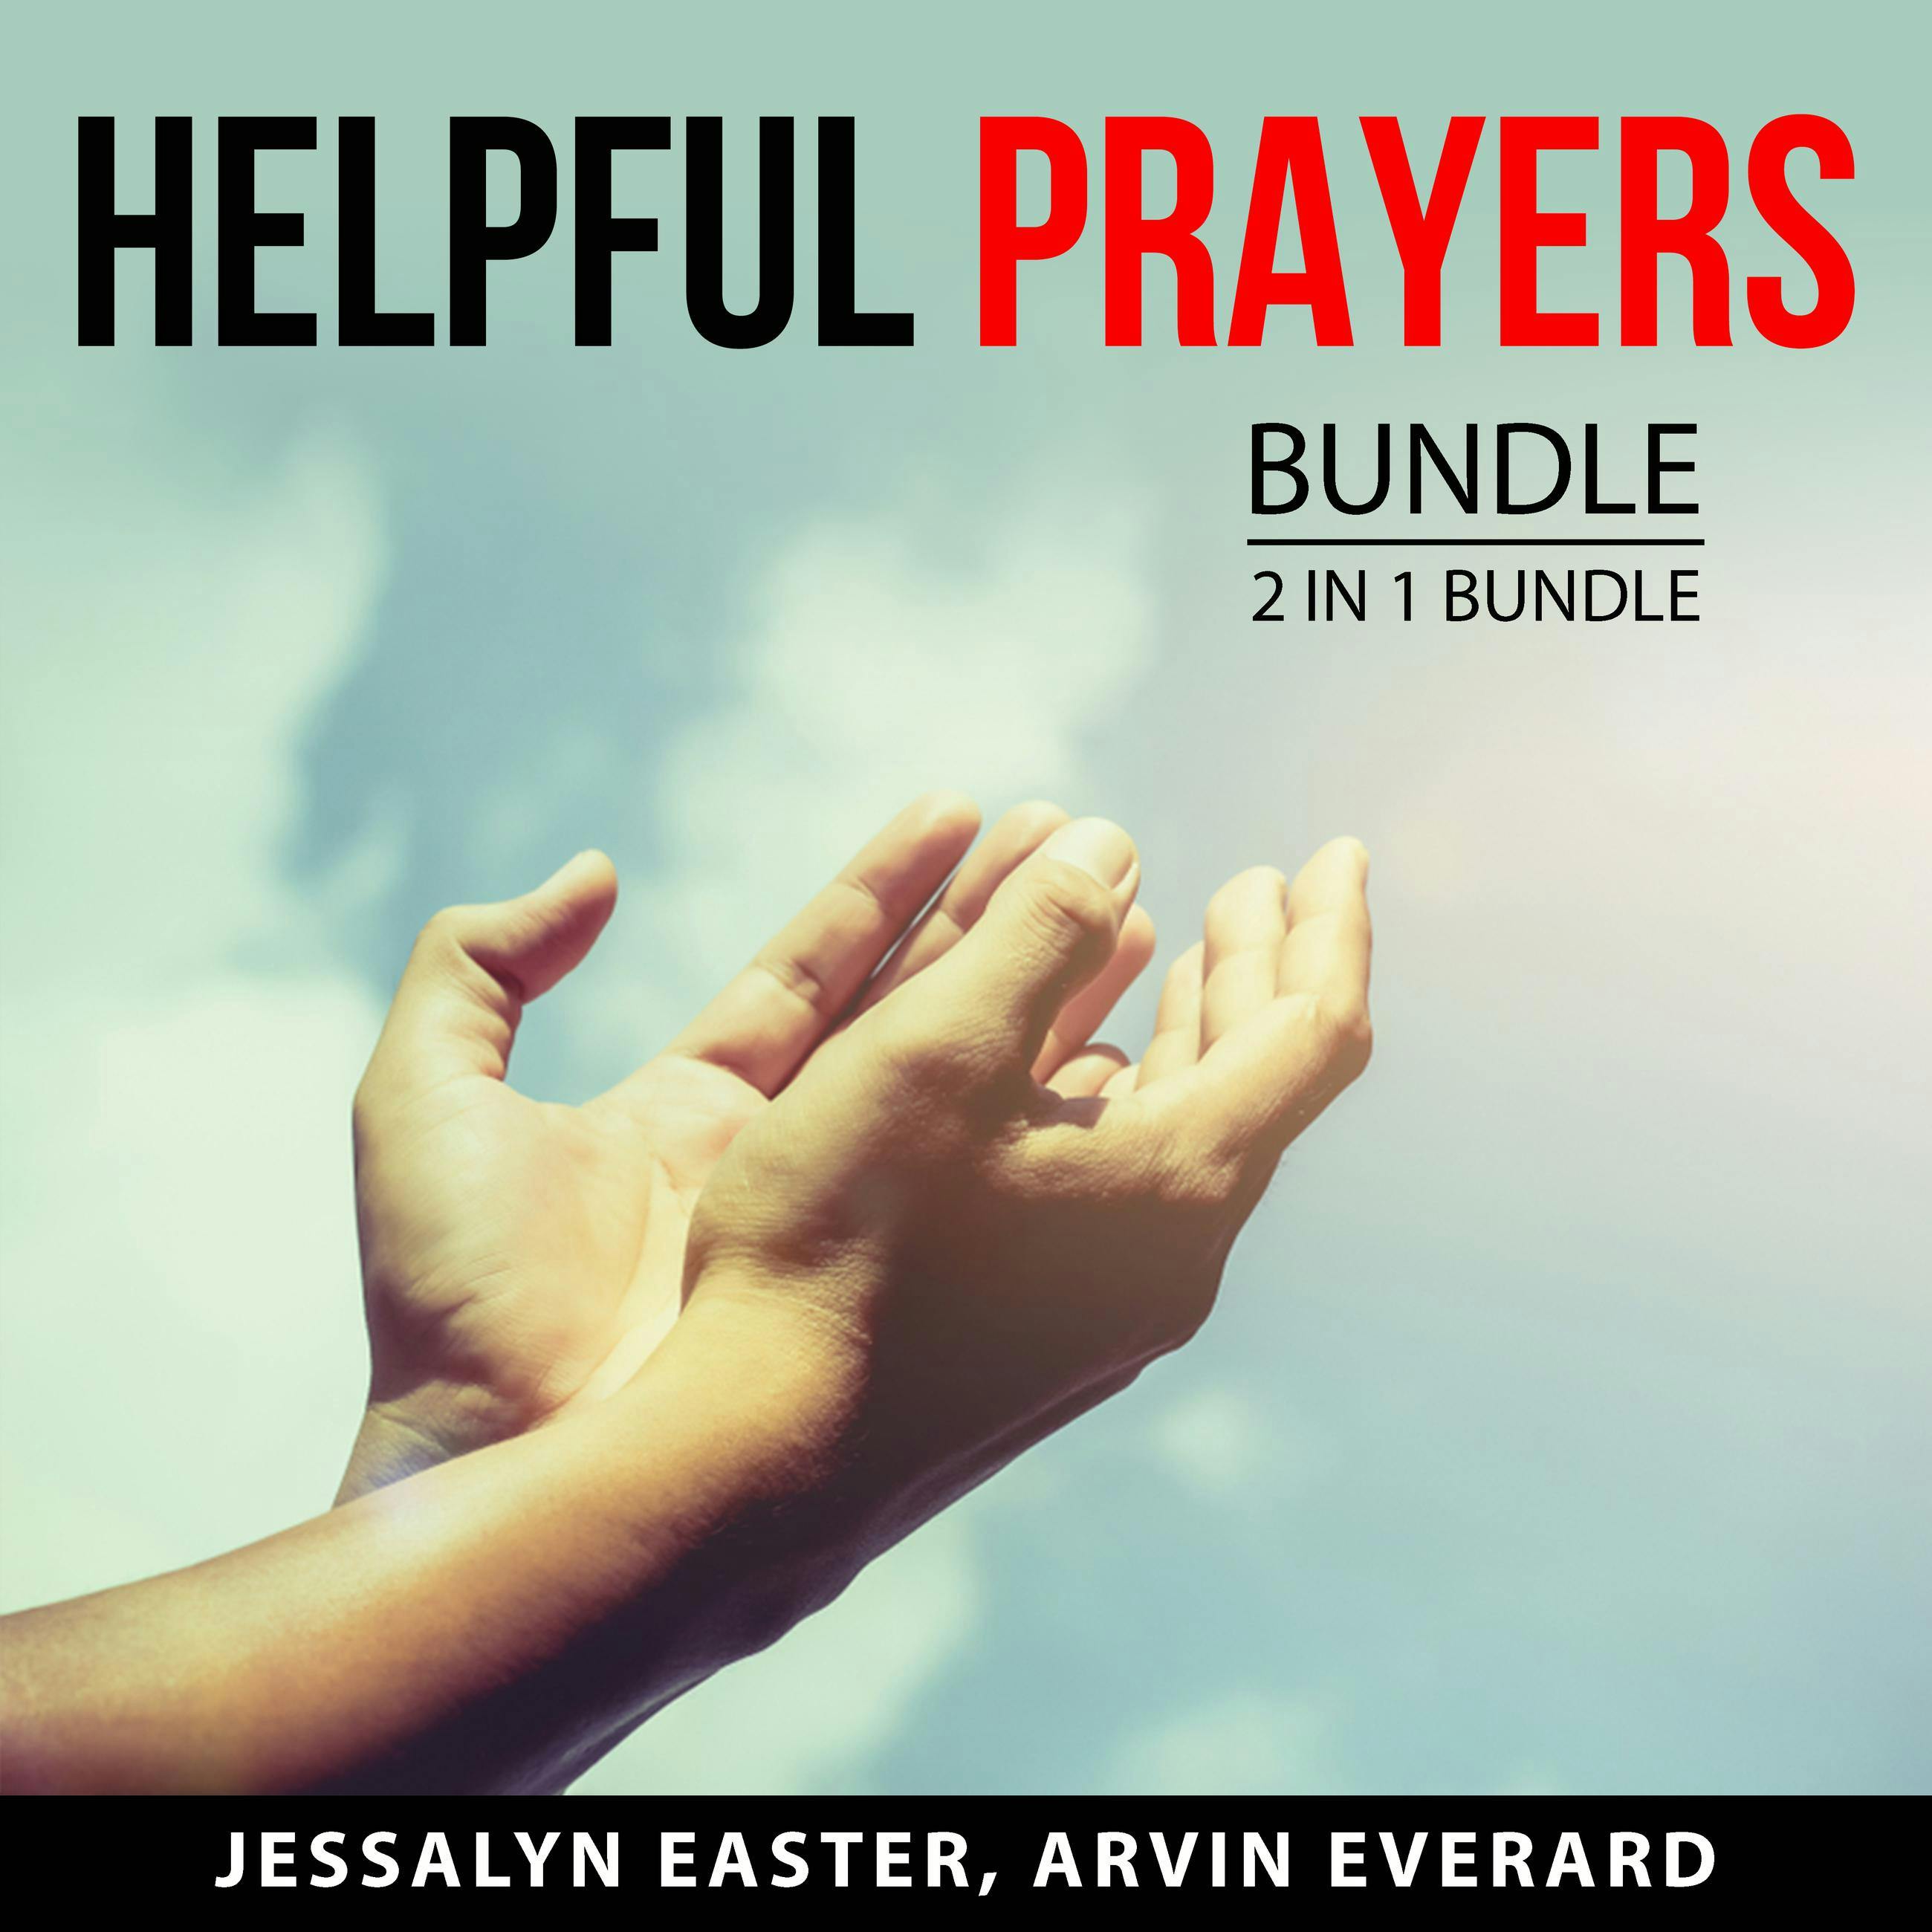 Helpful Prayers Bundle, 2 in 1 Bundle: Affirmative Prayers Book and The Power of Affirmative Prayers - undefined